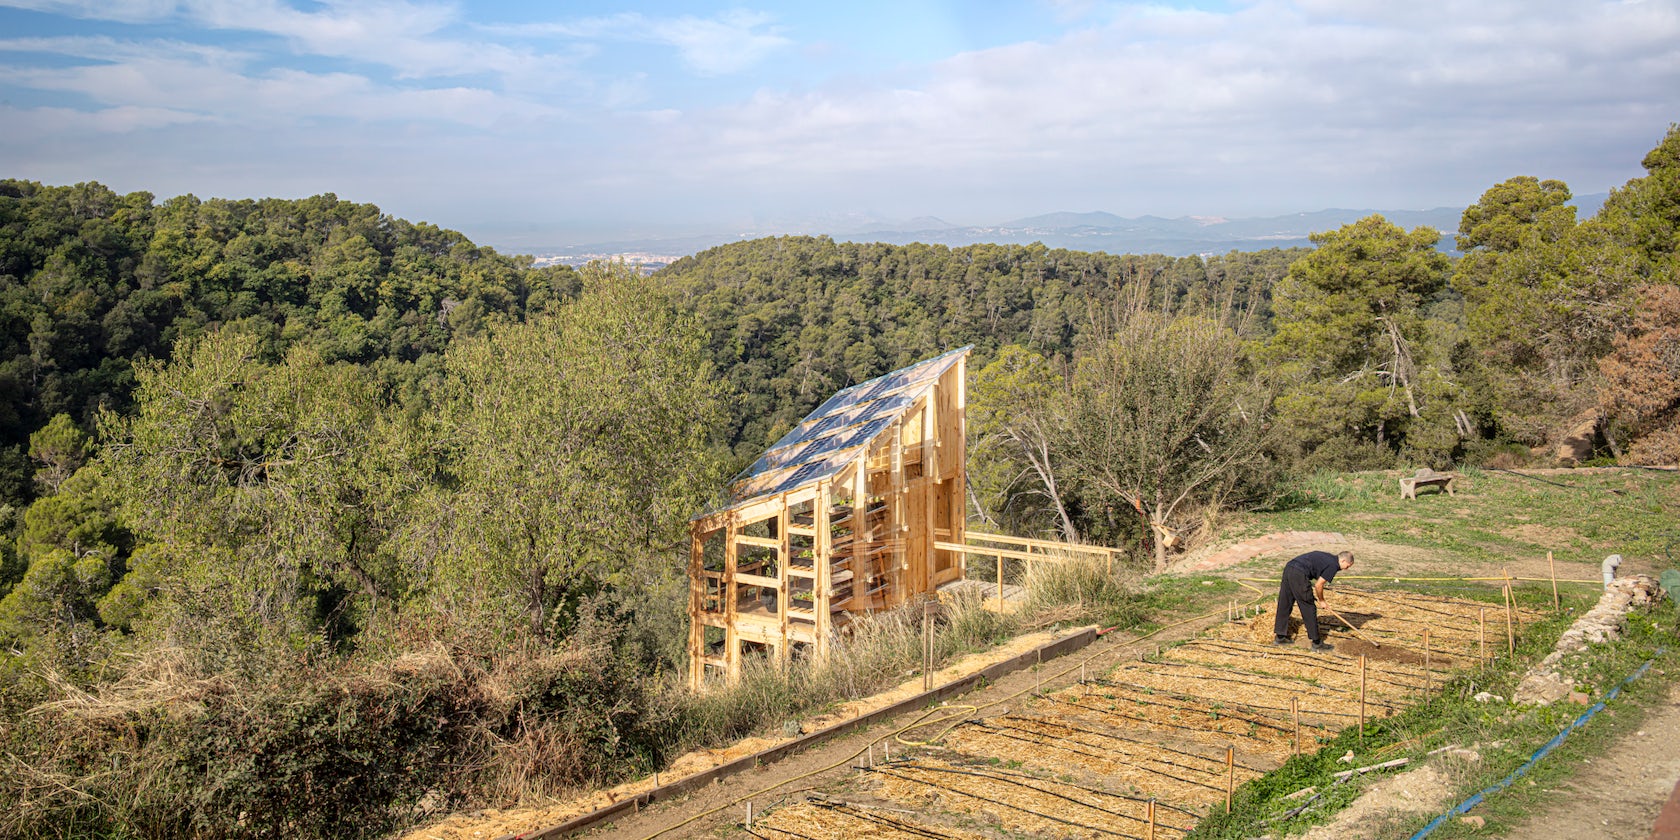 © IAAC Institute for Advanced Architecture of Catalonia